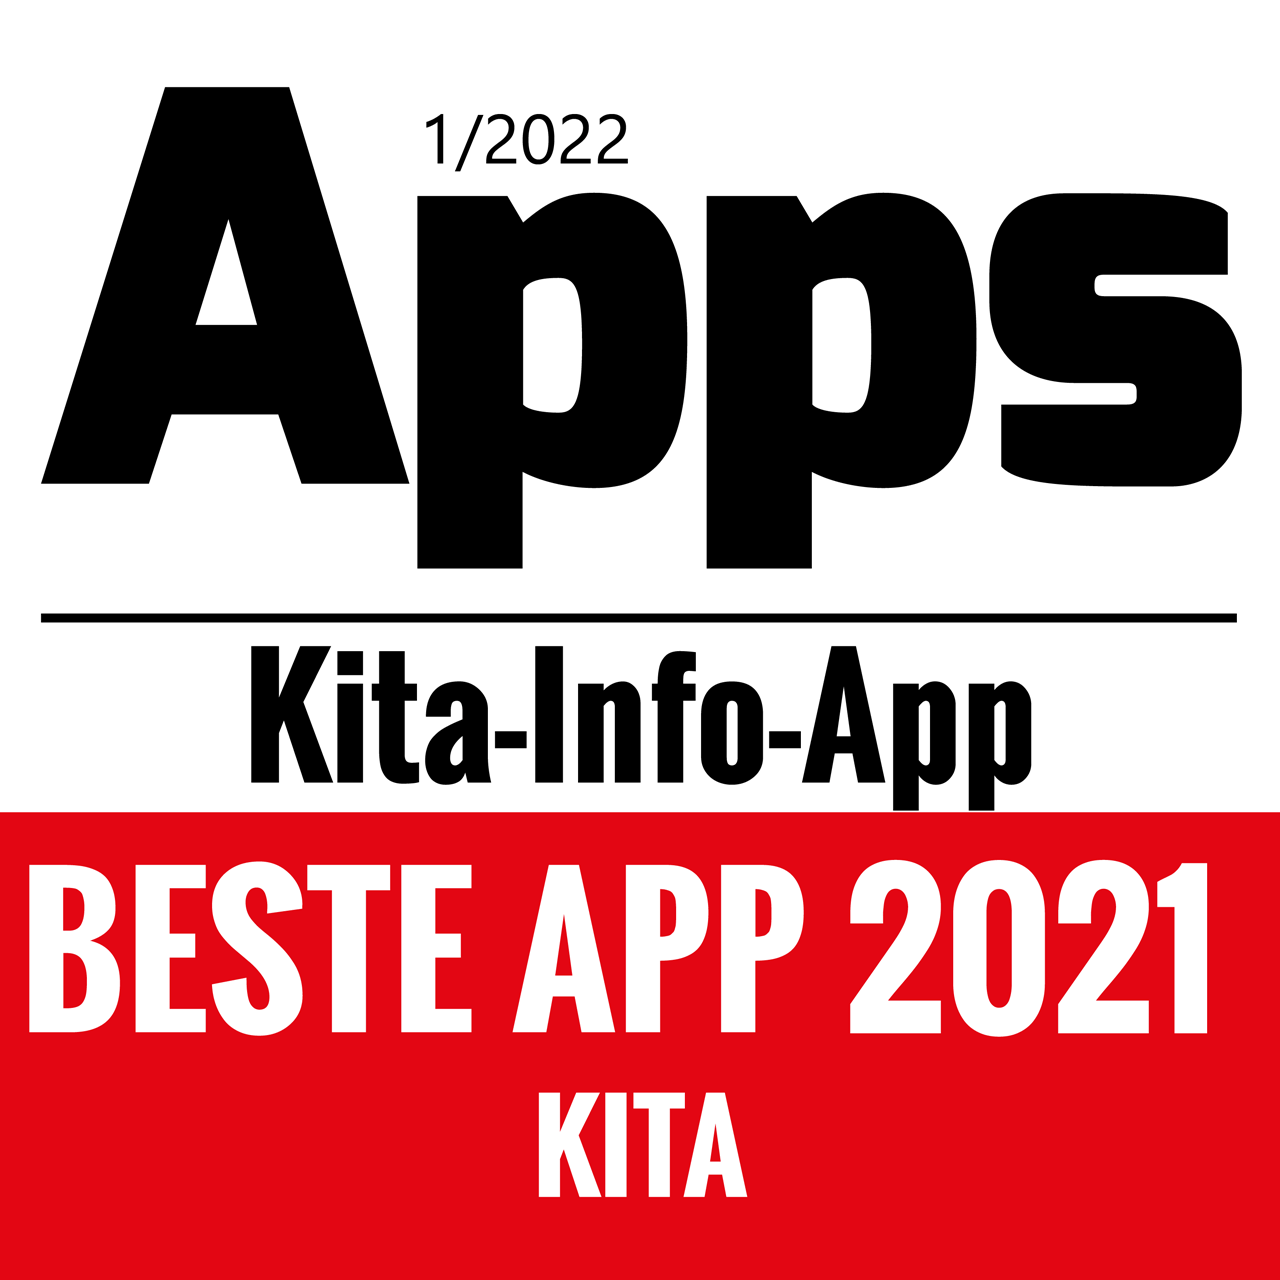 App Award Beste Kita App 2021